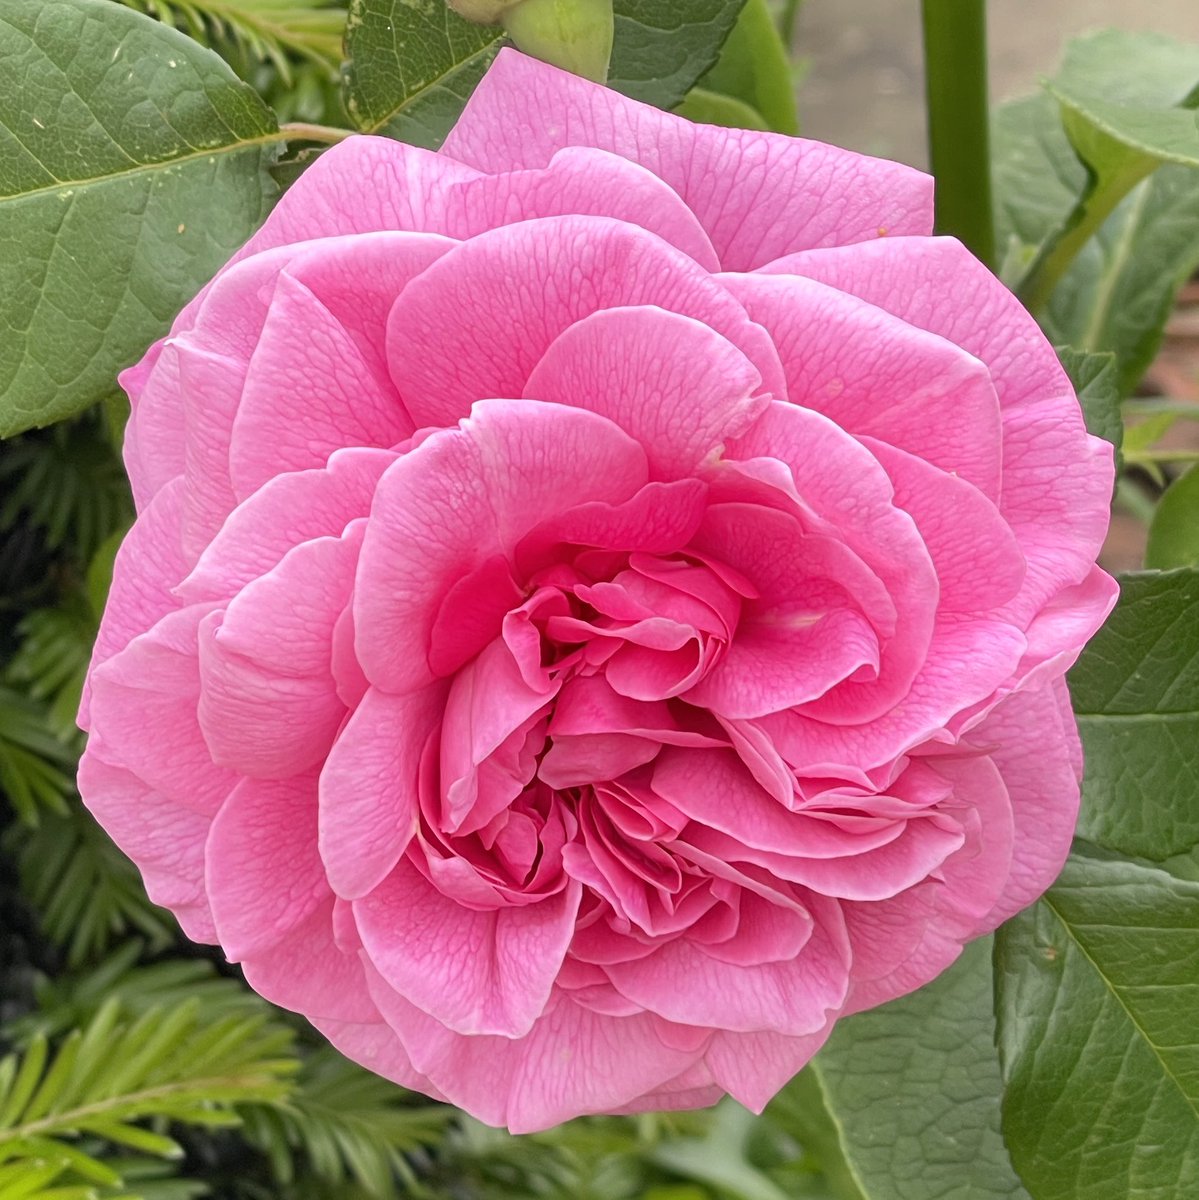 My first ‘Gertrude Jekylll’ rose of the season and she’s fabulous! 💕 #DailyBotanicalBeauty #flowers